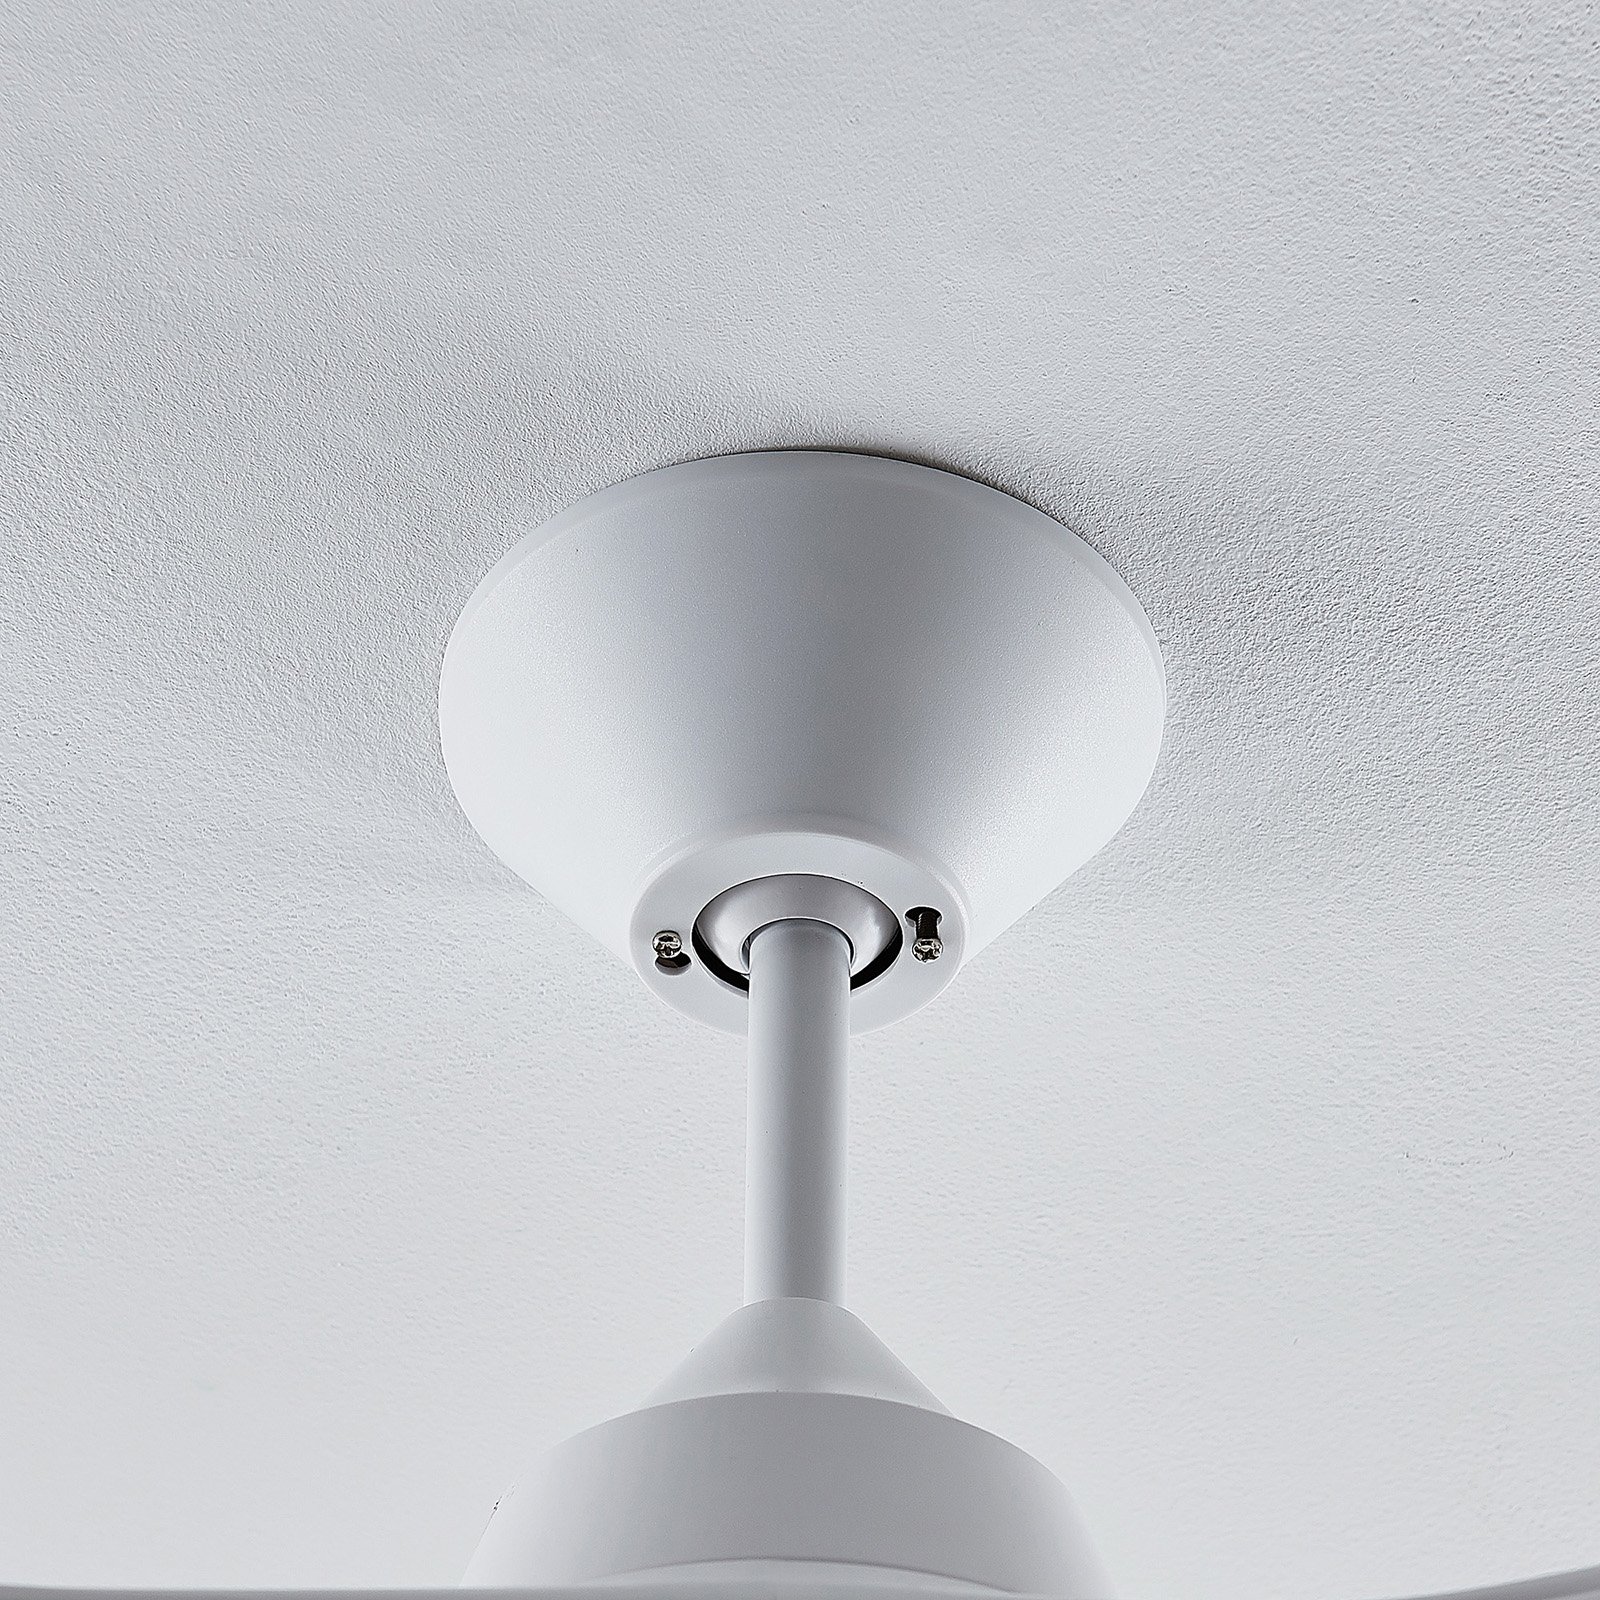 Starluna Pira LED ceiling fan, 3 blades white